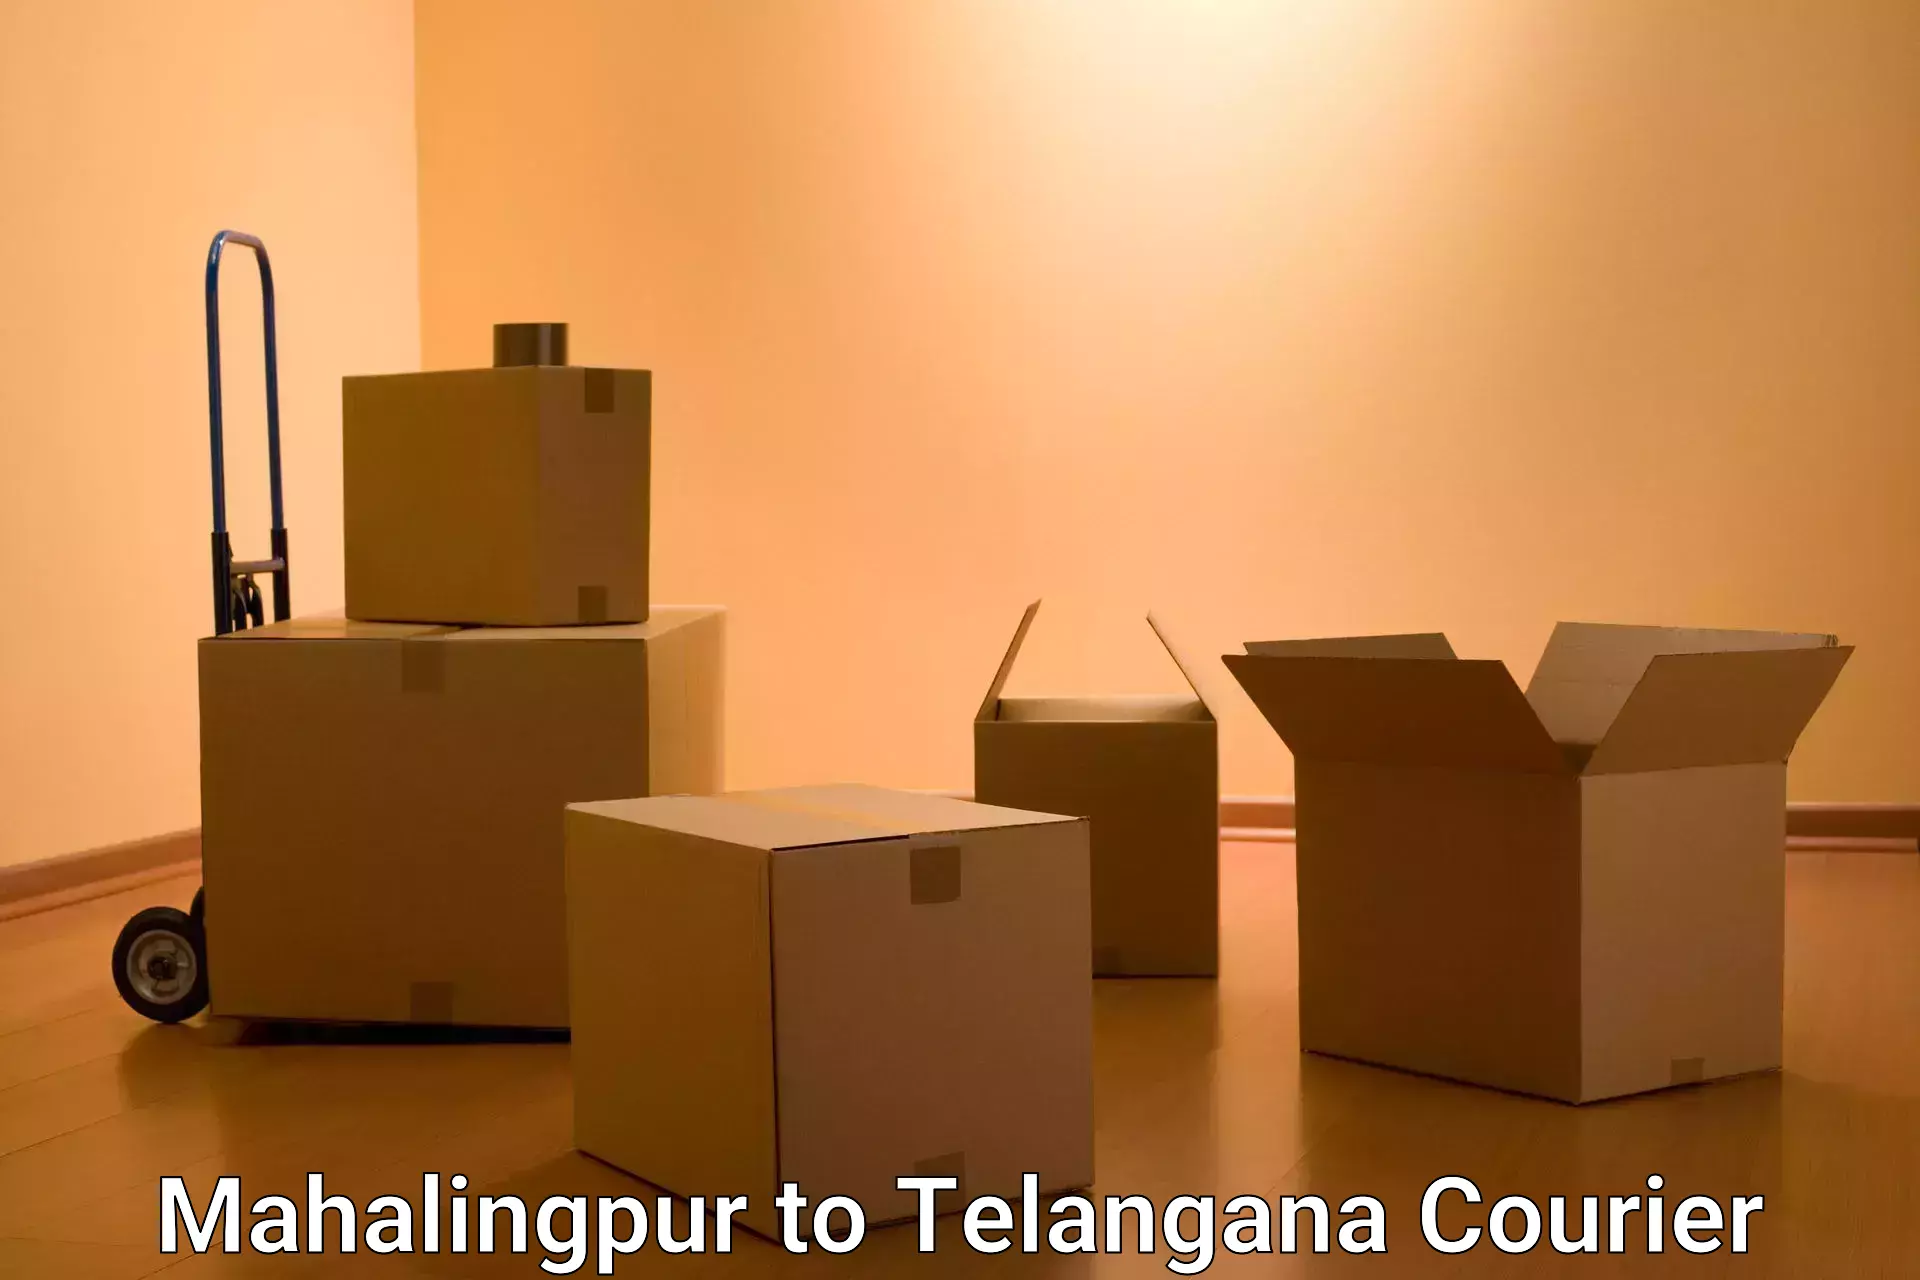 Courier service comparison Mahalingpur to Peddapalli